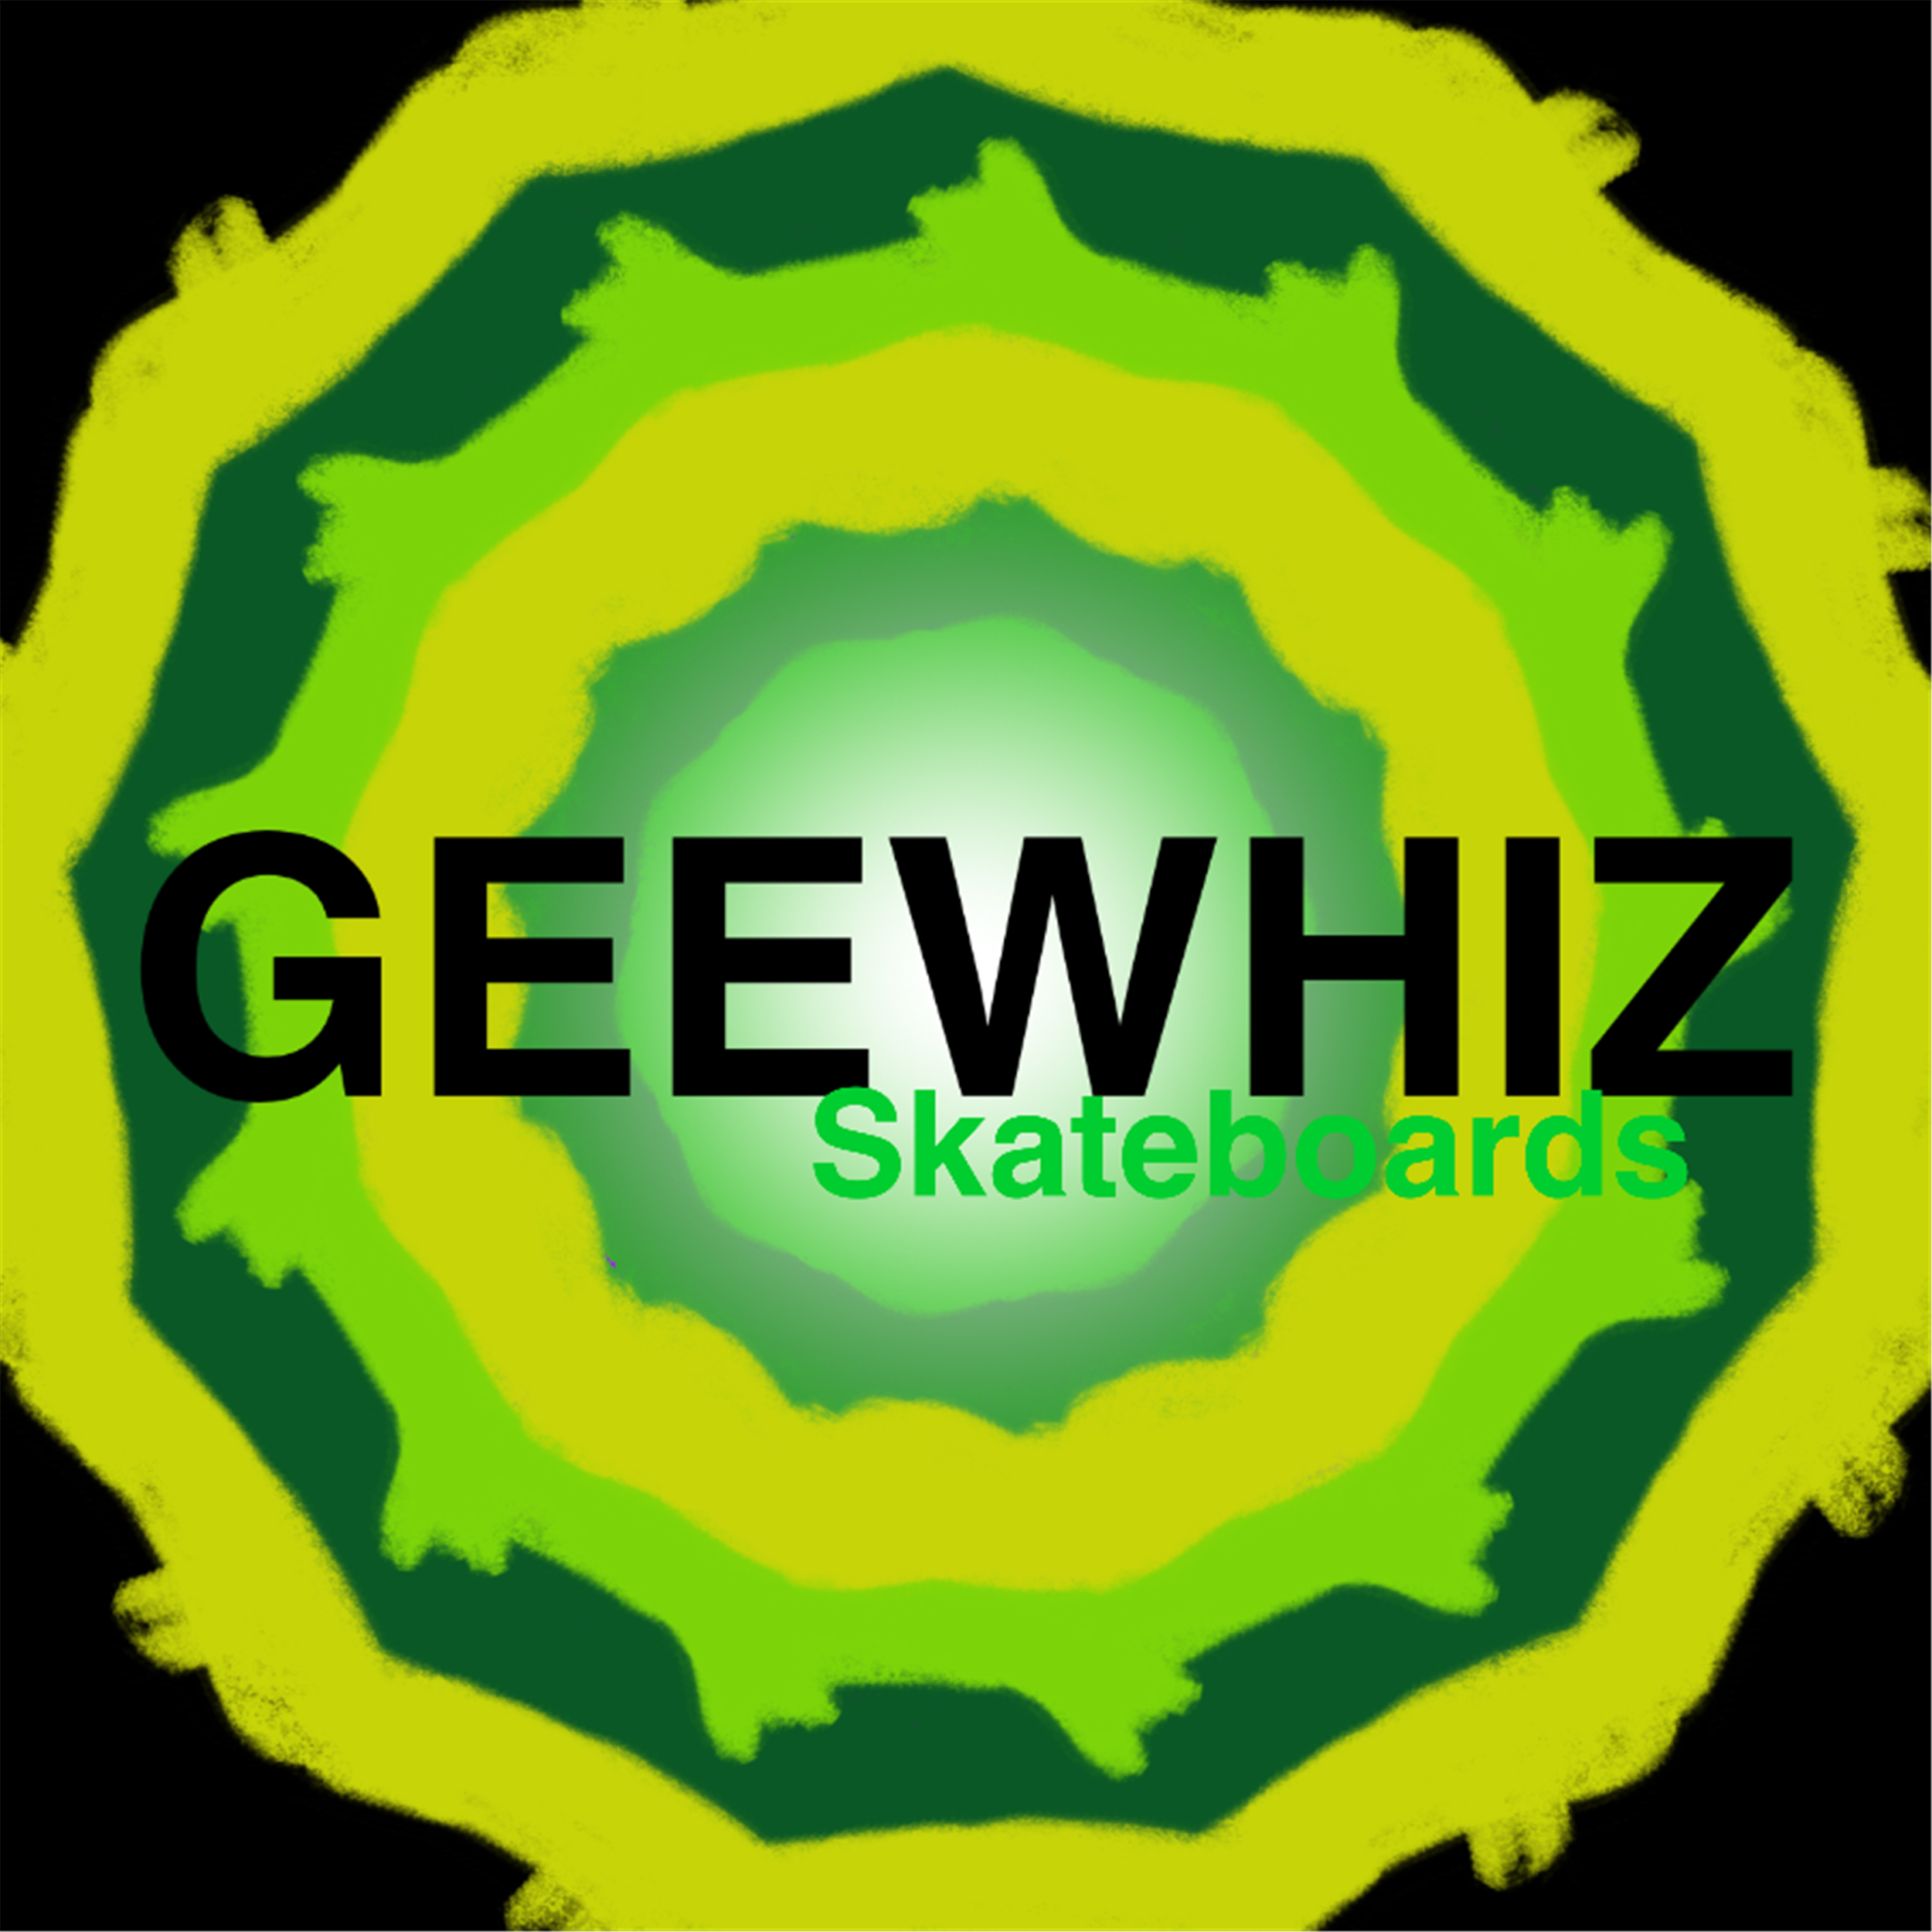 GeeWhiz Skateboards